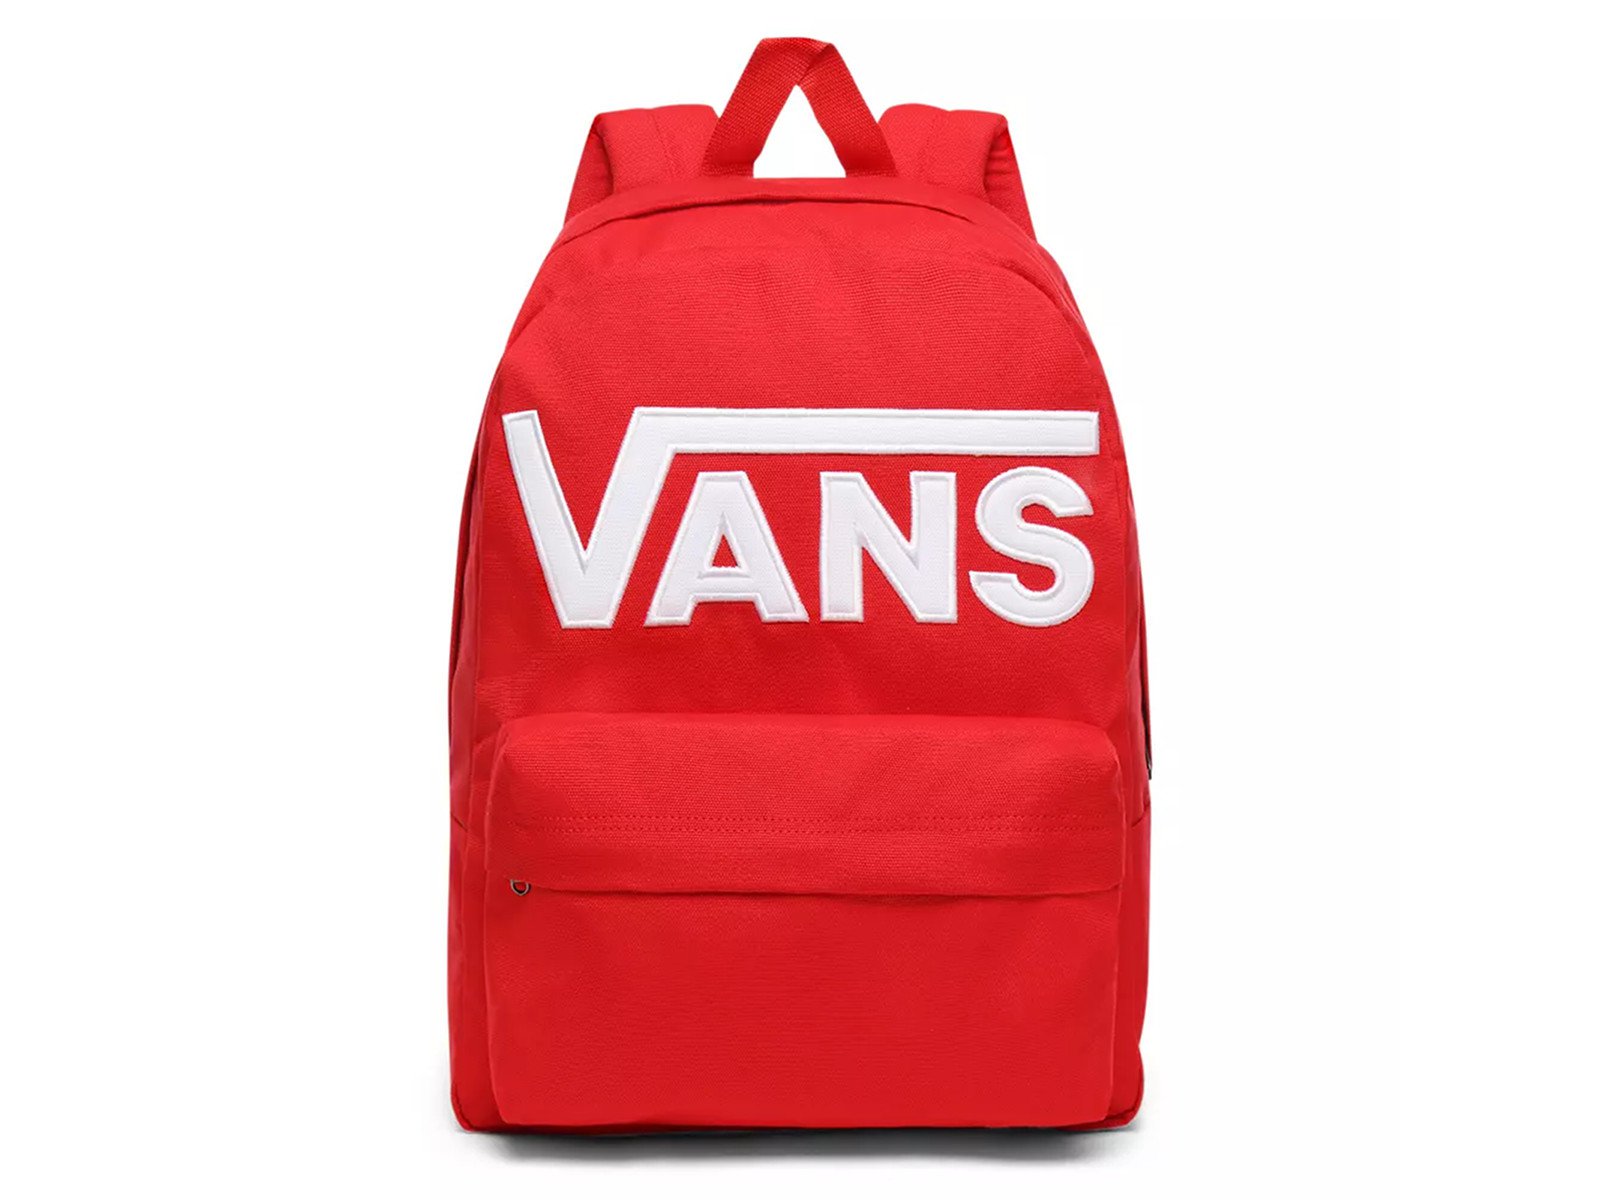 vans backpack online